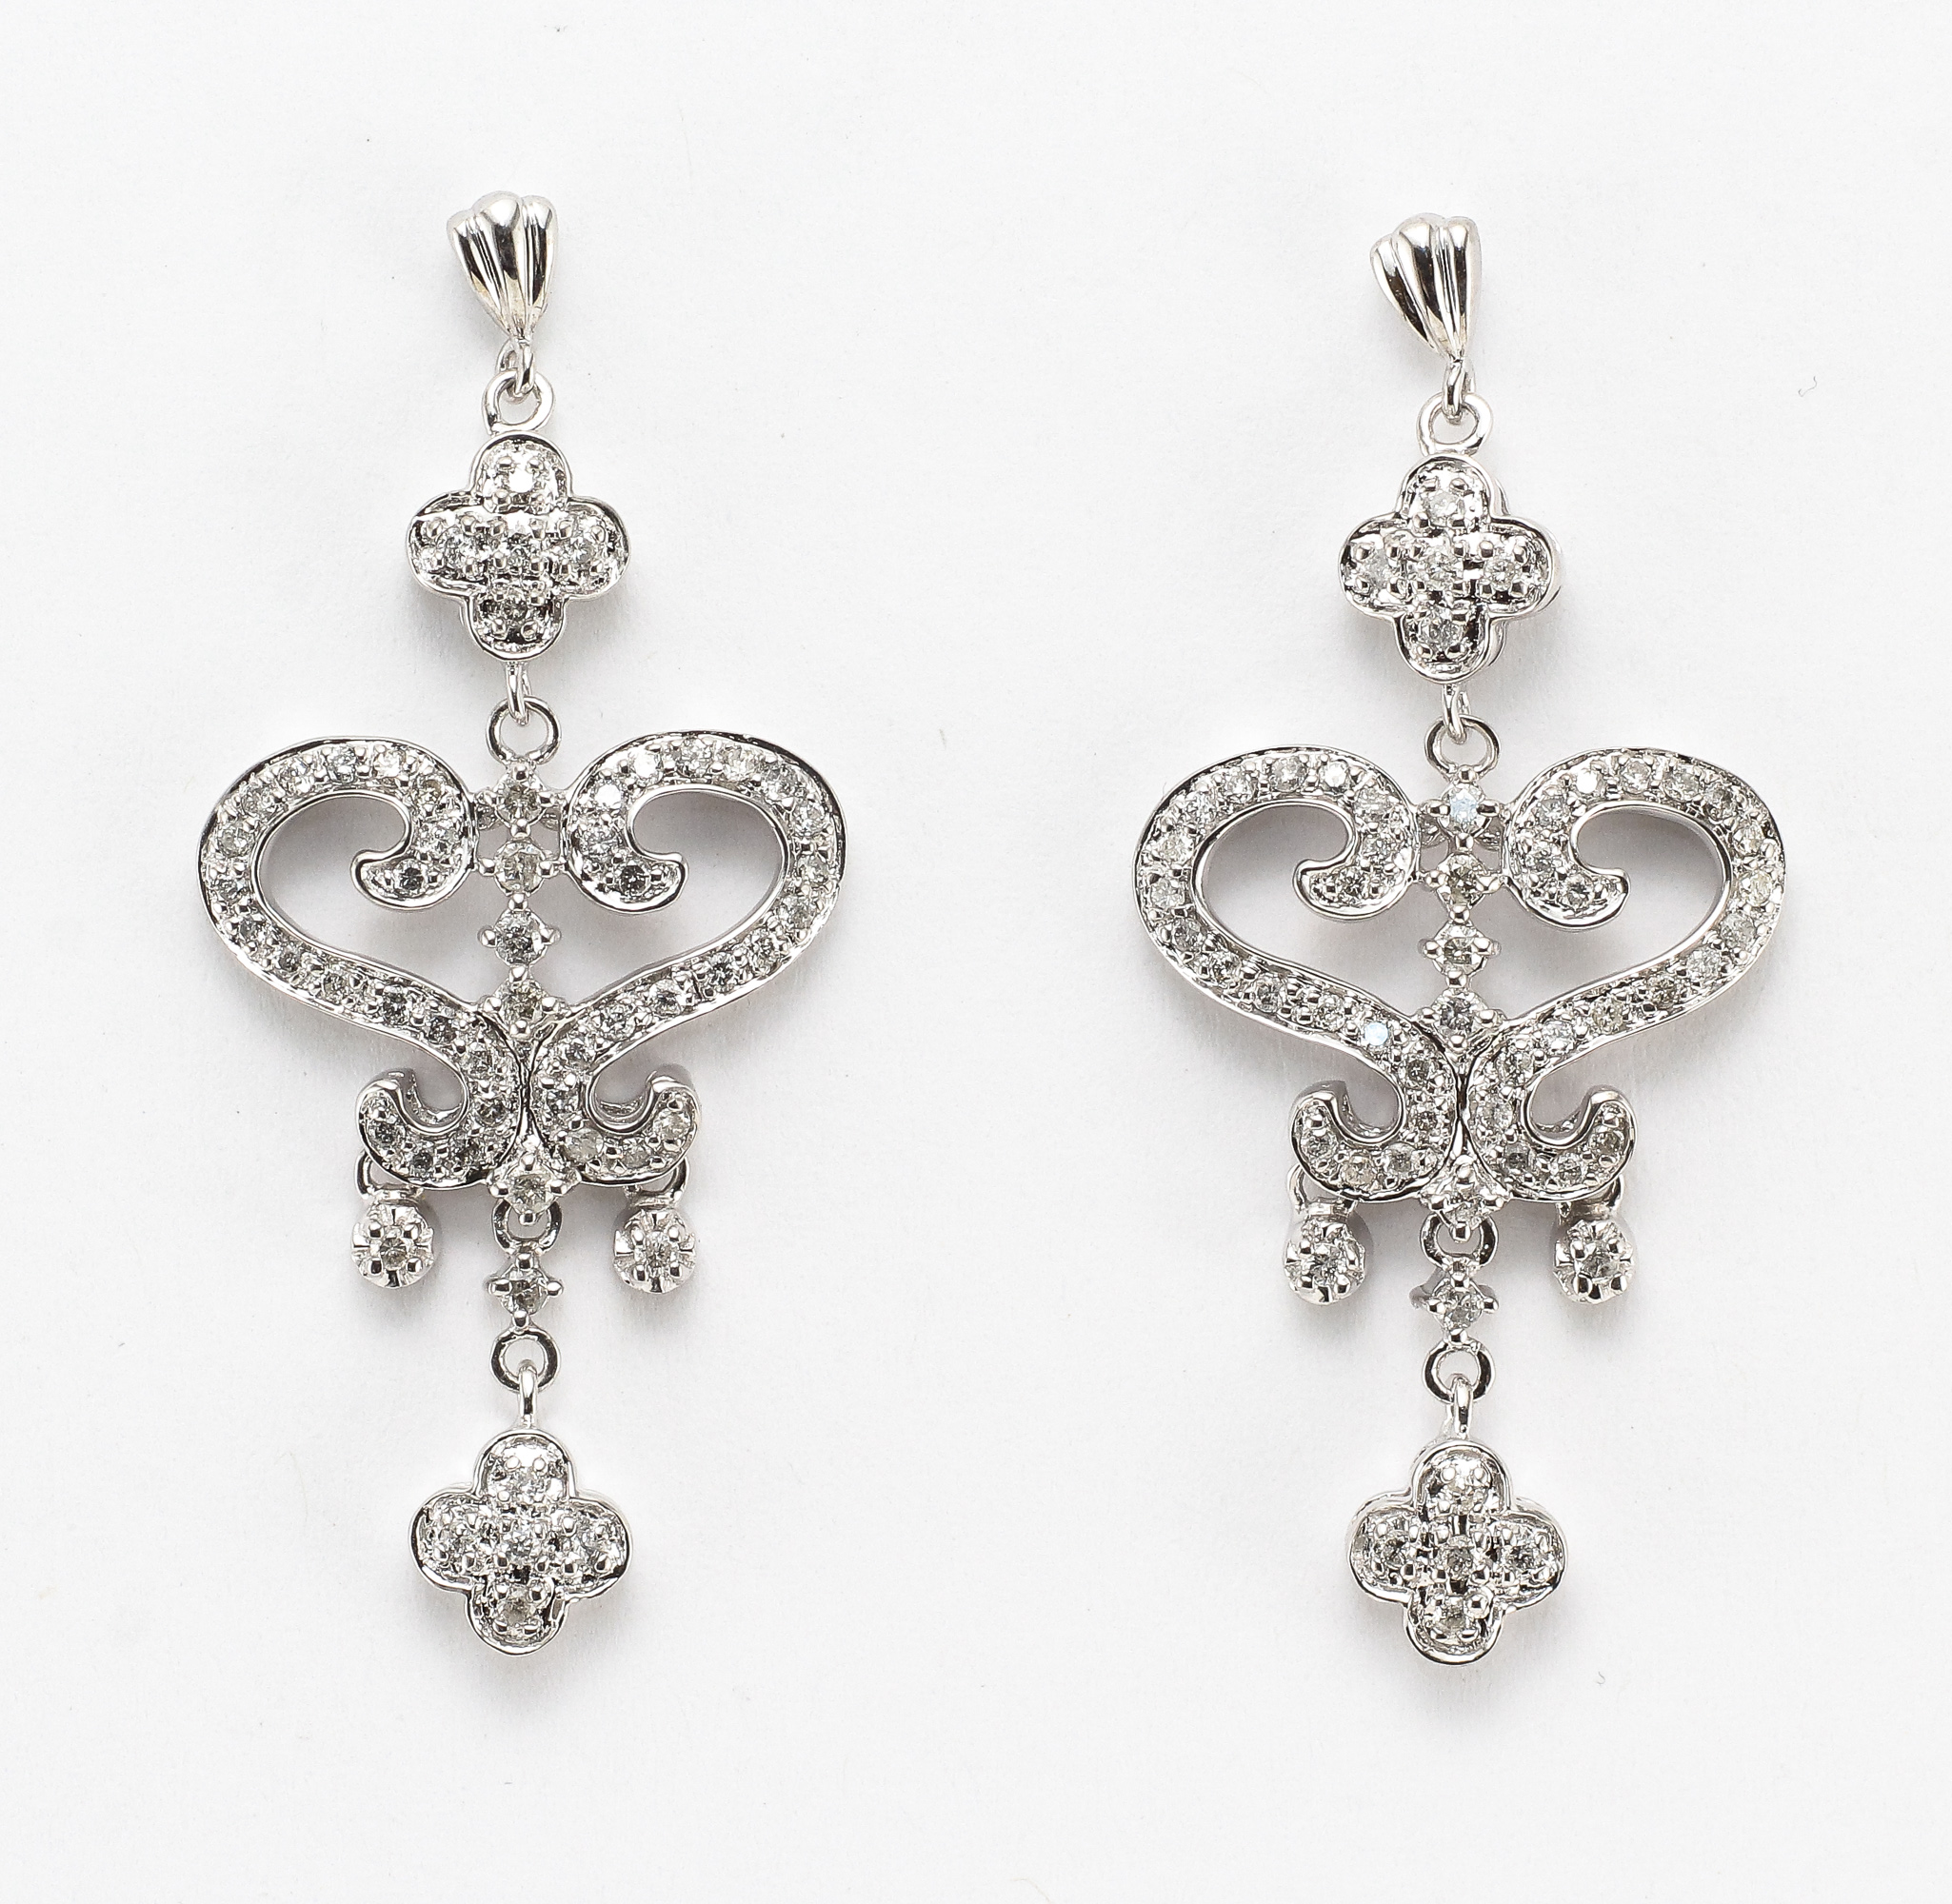 14K Diamond Earrings Fleur De Lis Motif White Gold Drop Dangle | eBay